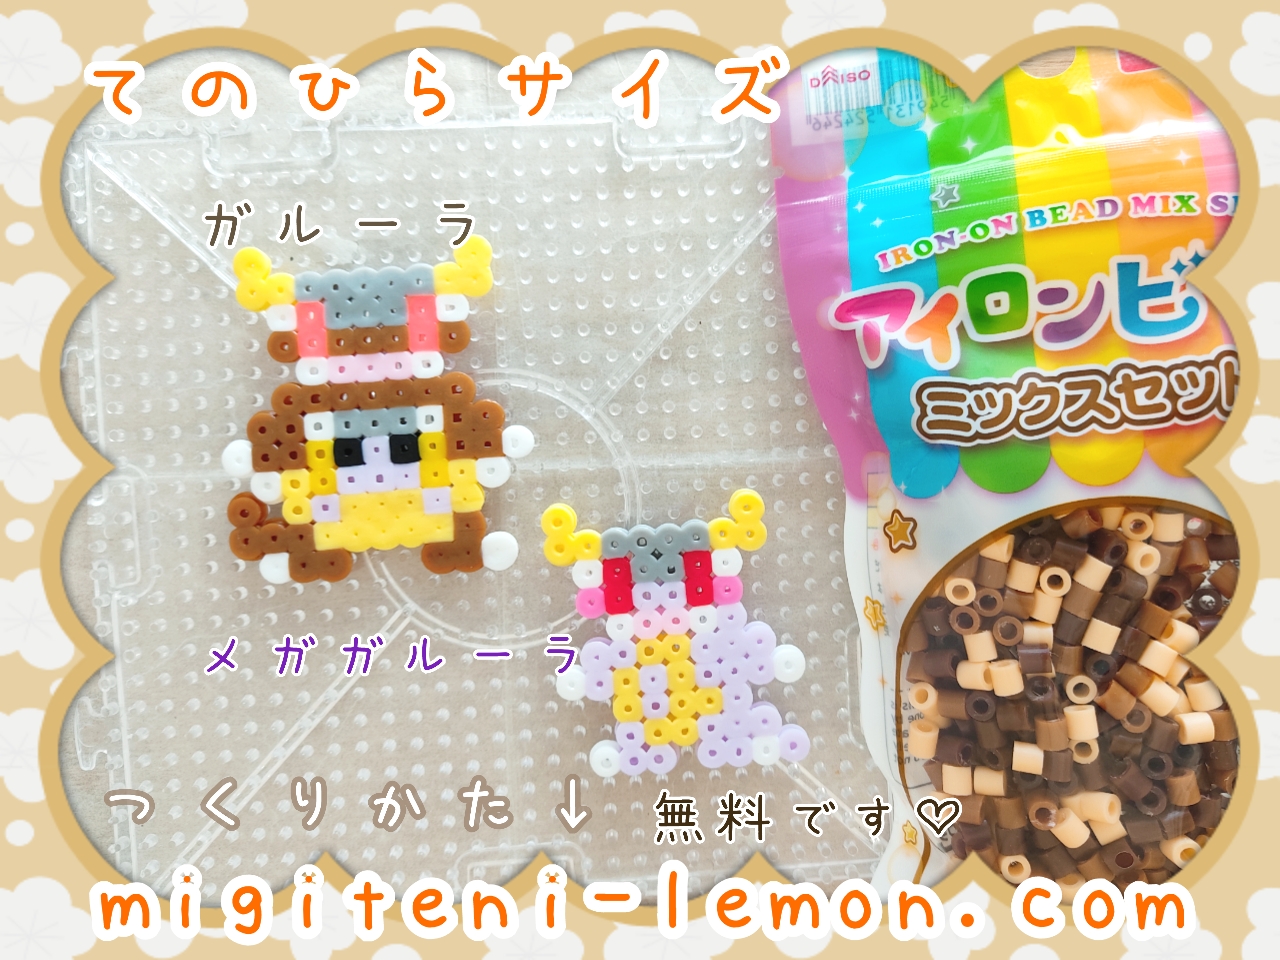 garula-kangaskhan-mega-kids-pokemon-handmade-beads-free-zuan-oyako-small-kawaii-daiso